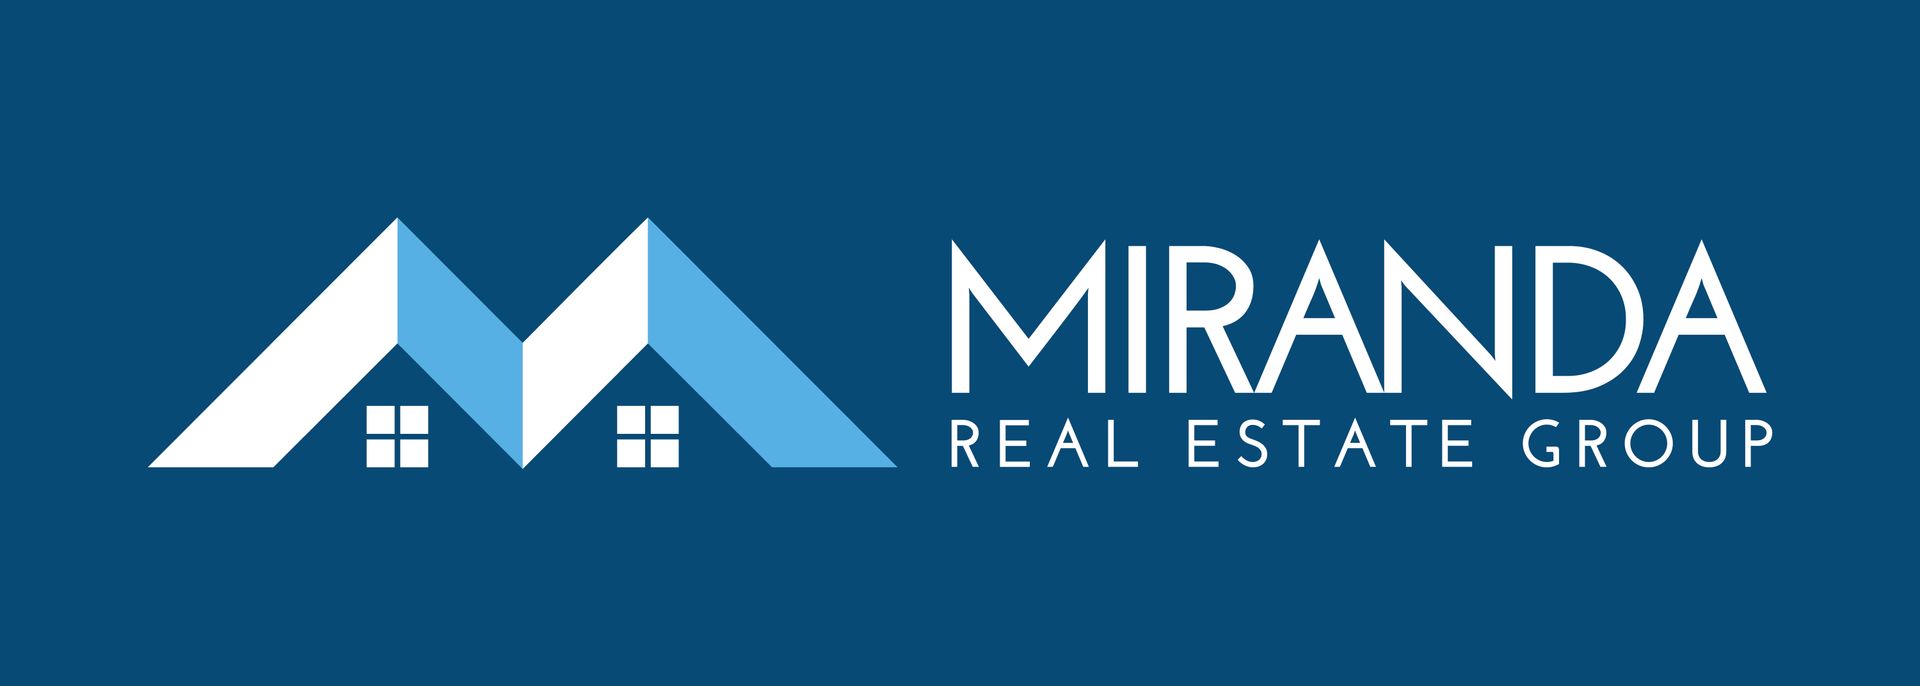 Miranda Real Estate Group